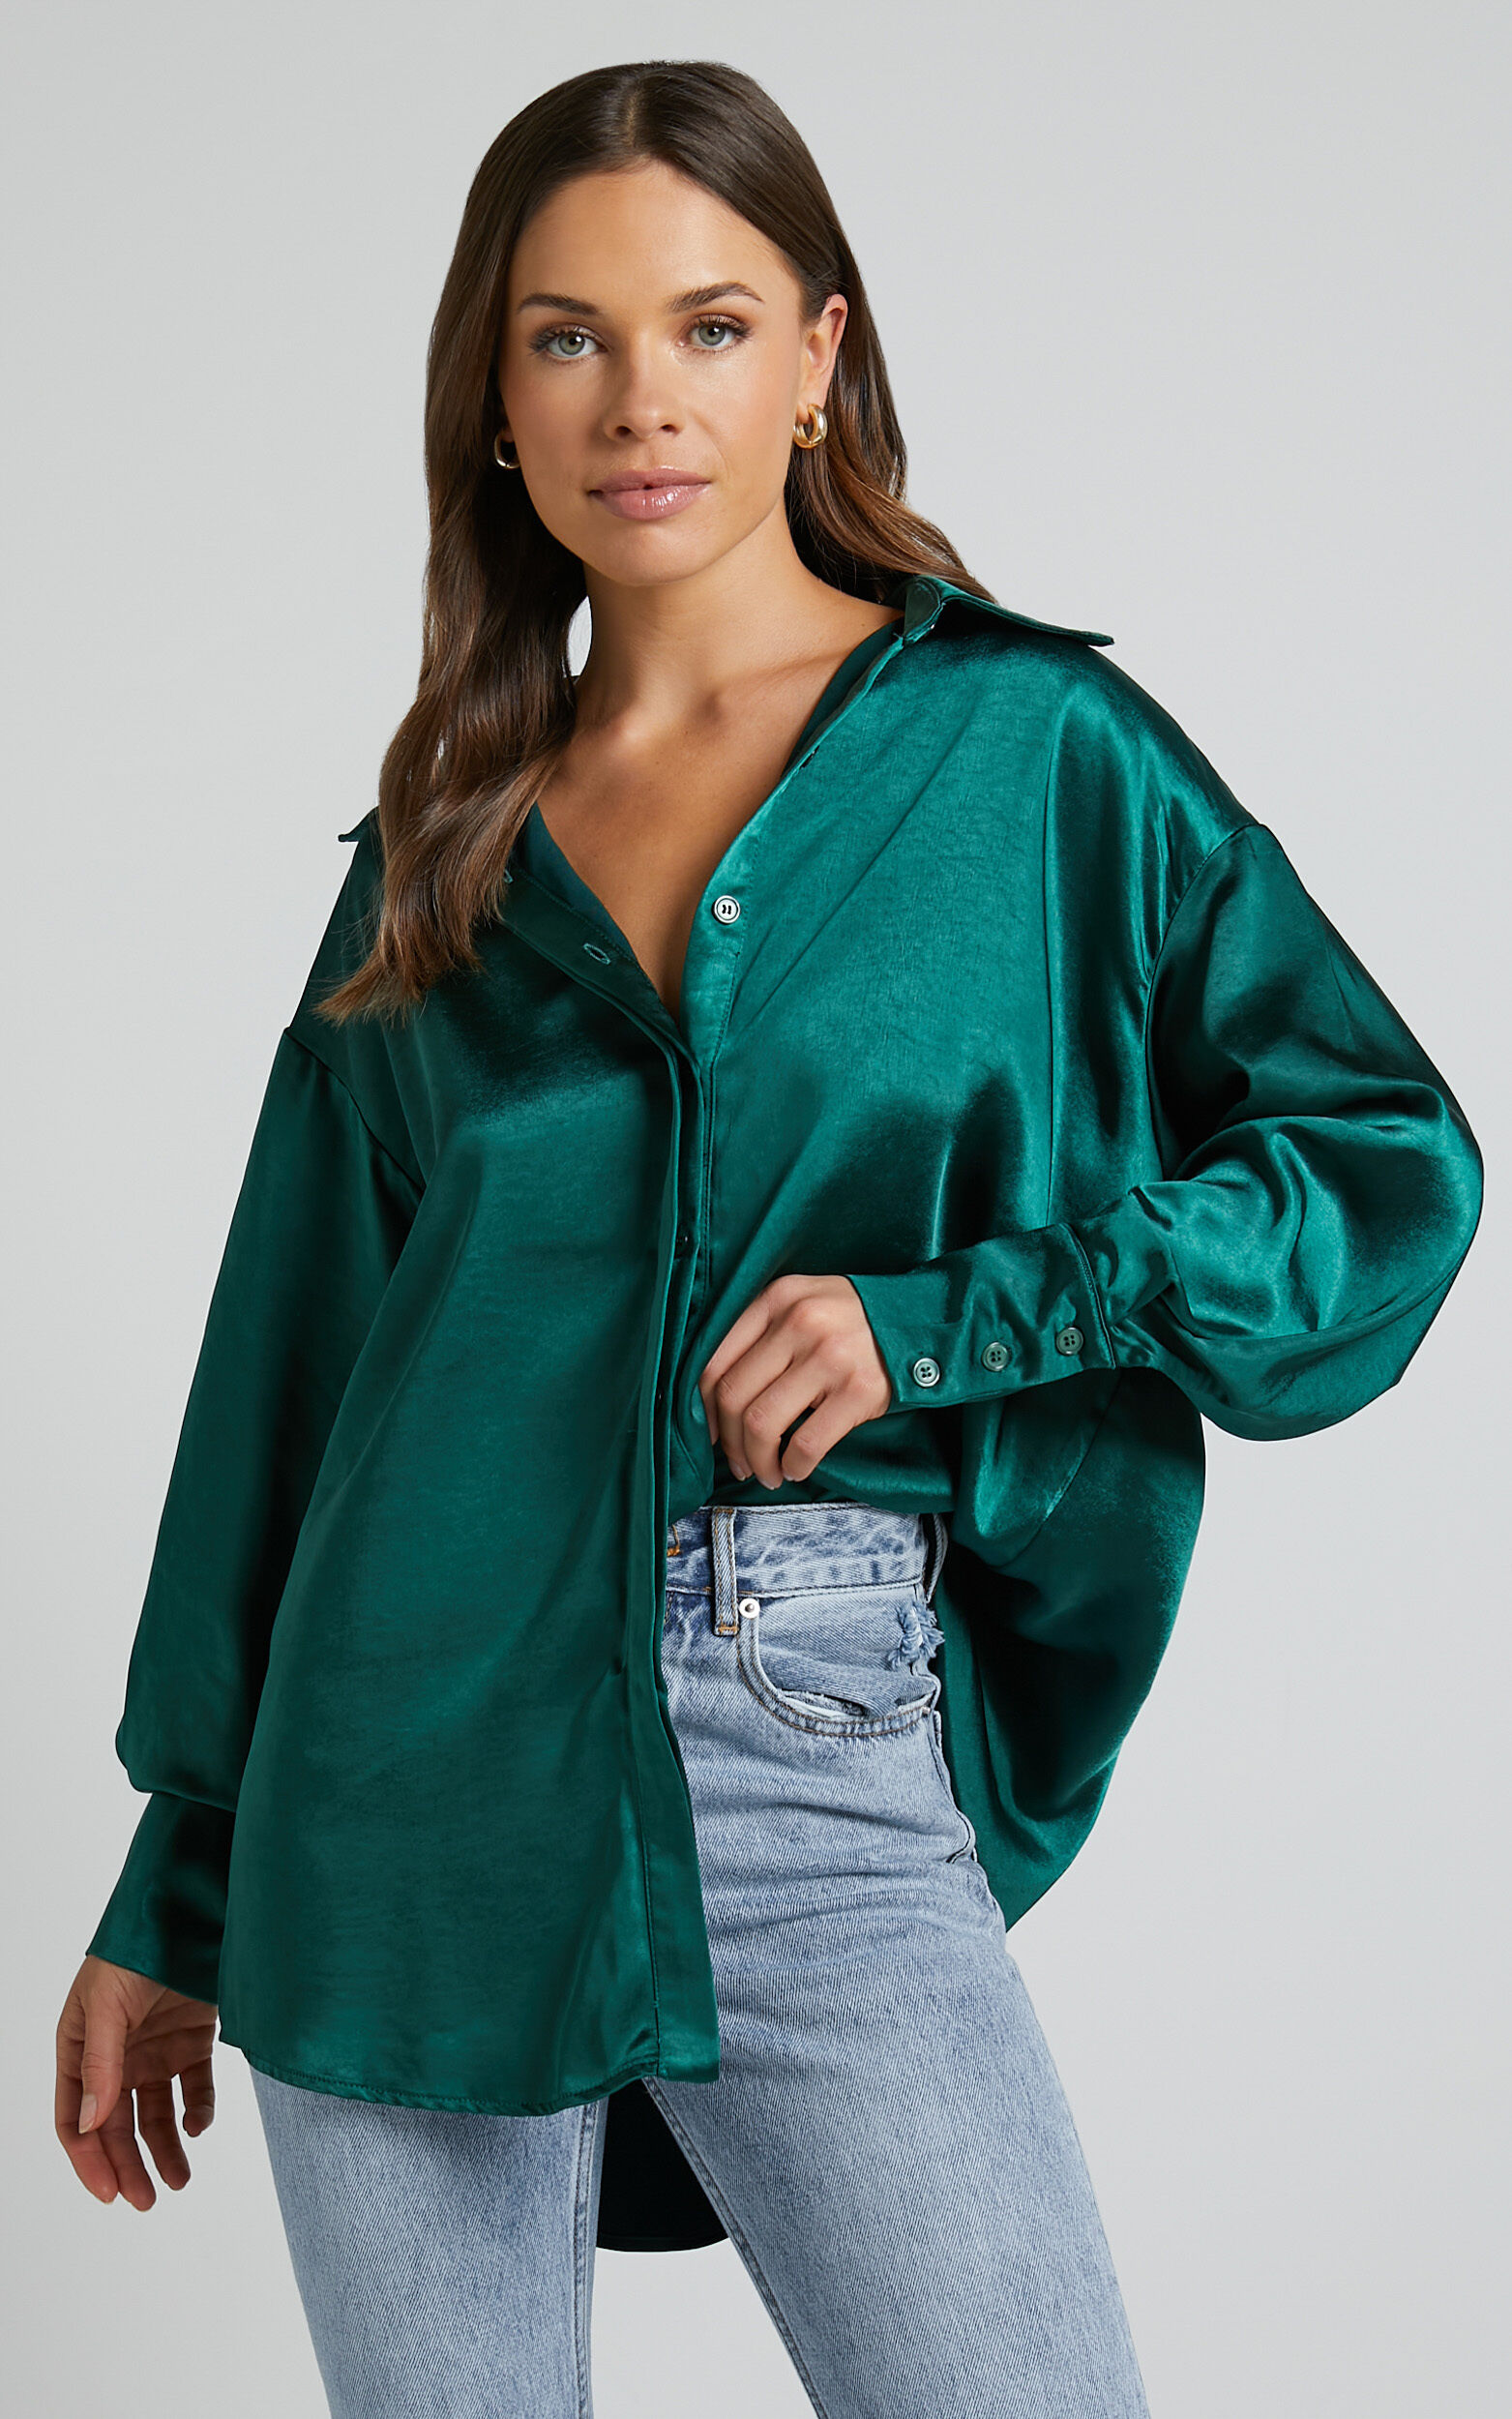 Azurine Shirt - Oversized Button Up Shirt in Green - 04, GRN4